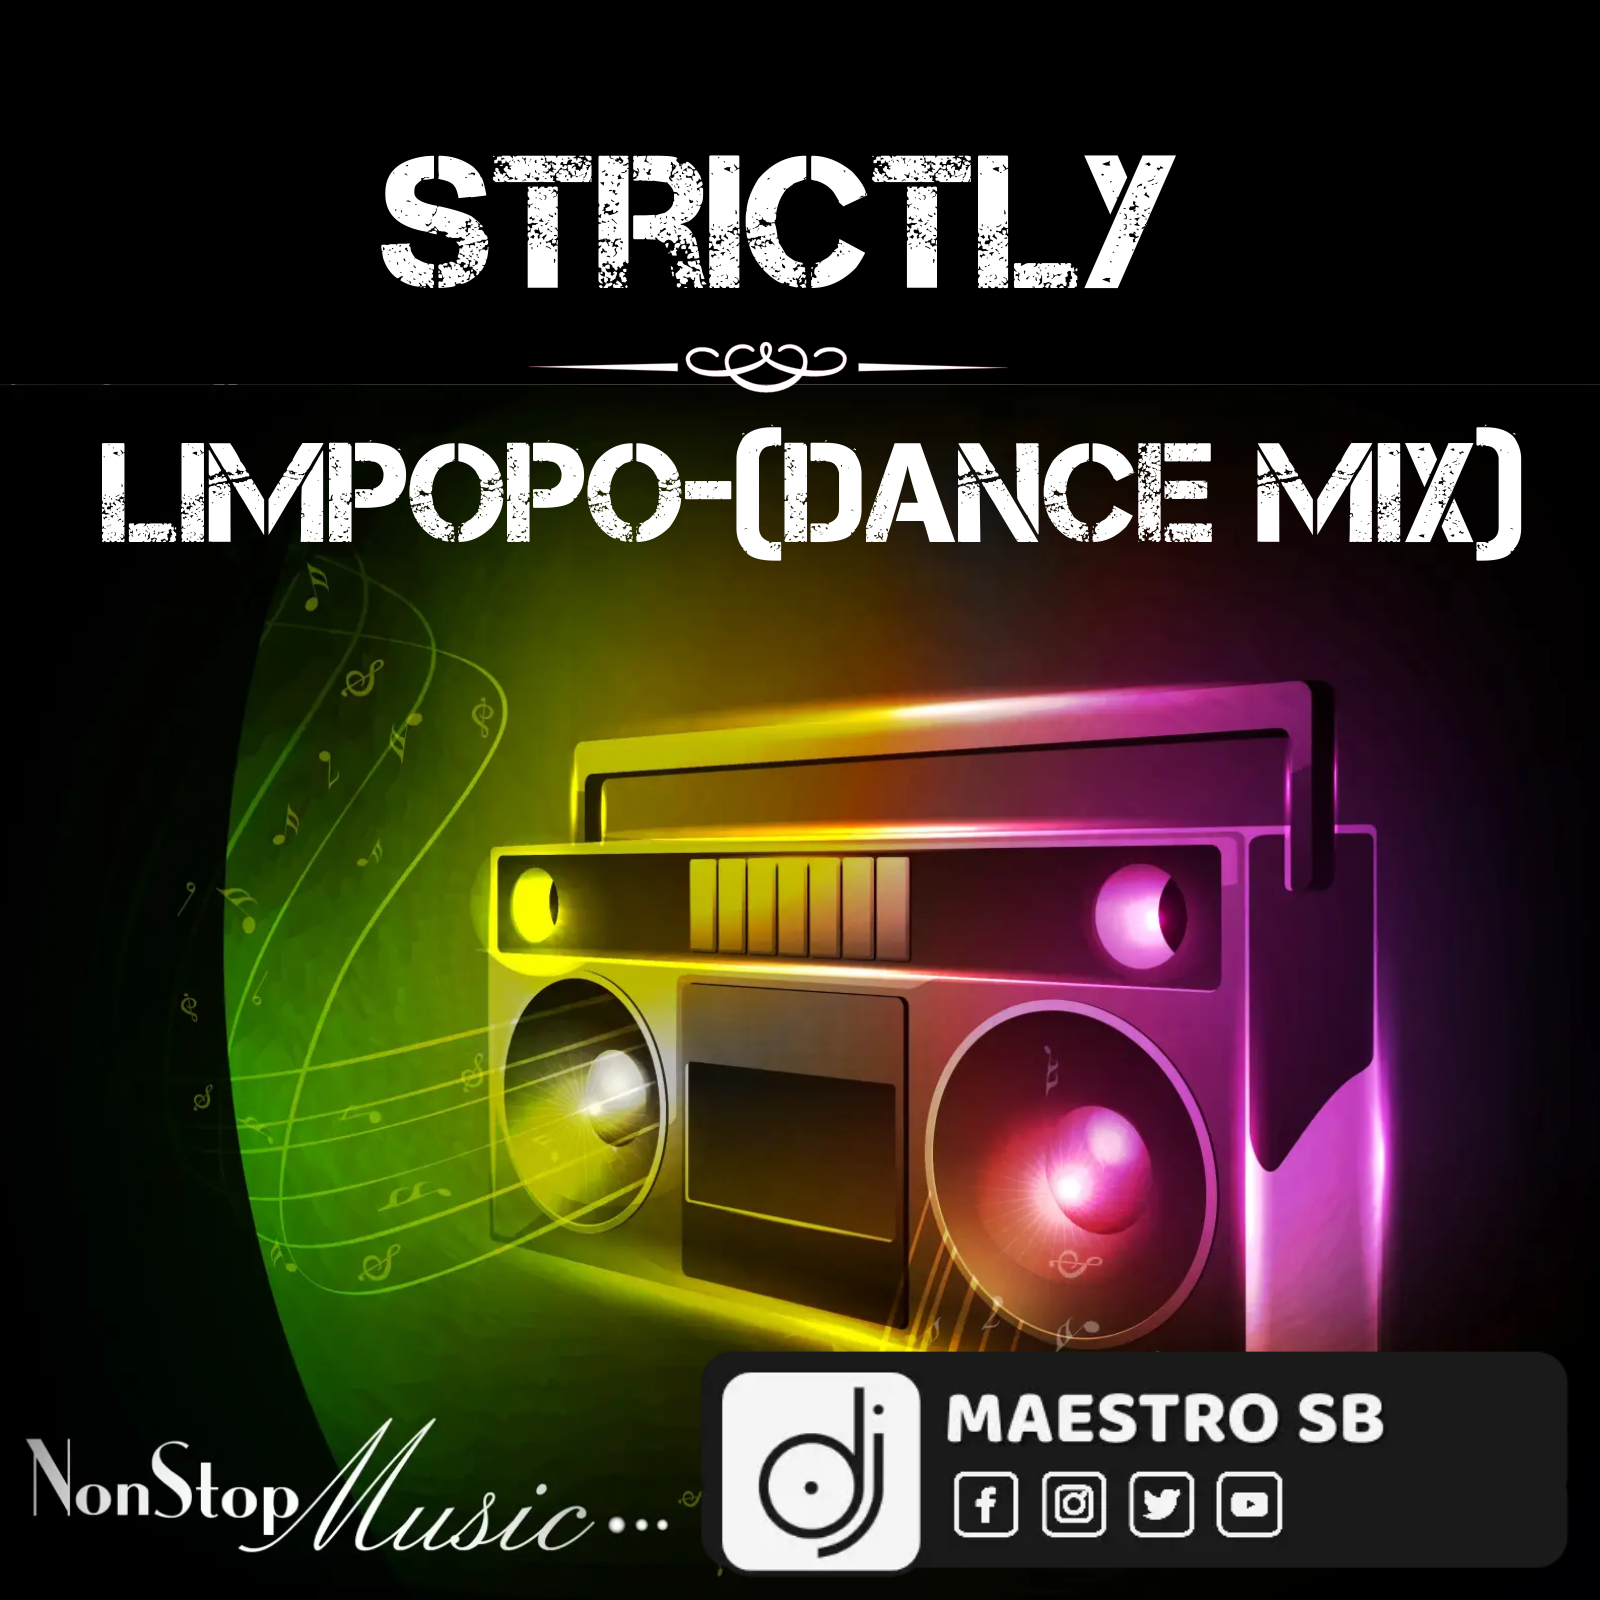 Strictly Limpopo-dance mix - Maestro SB